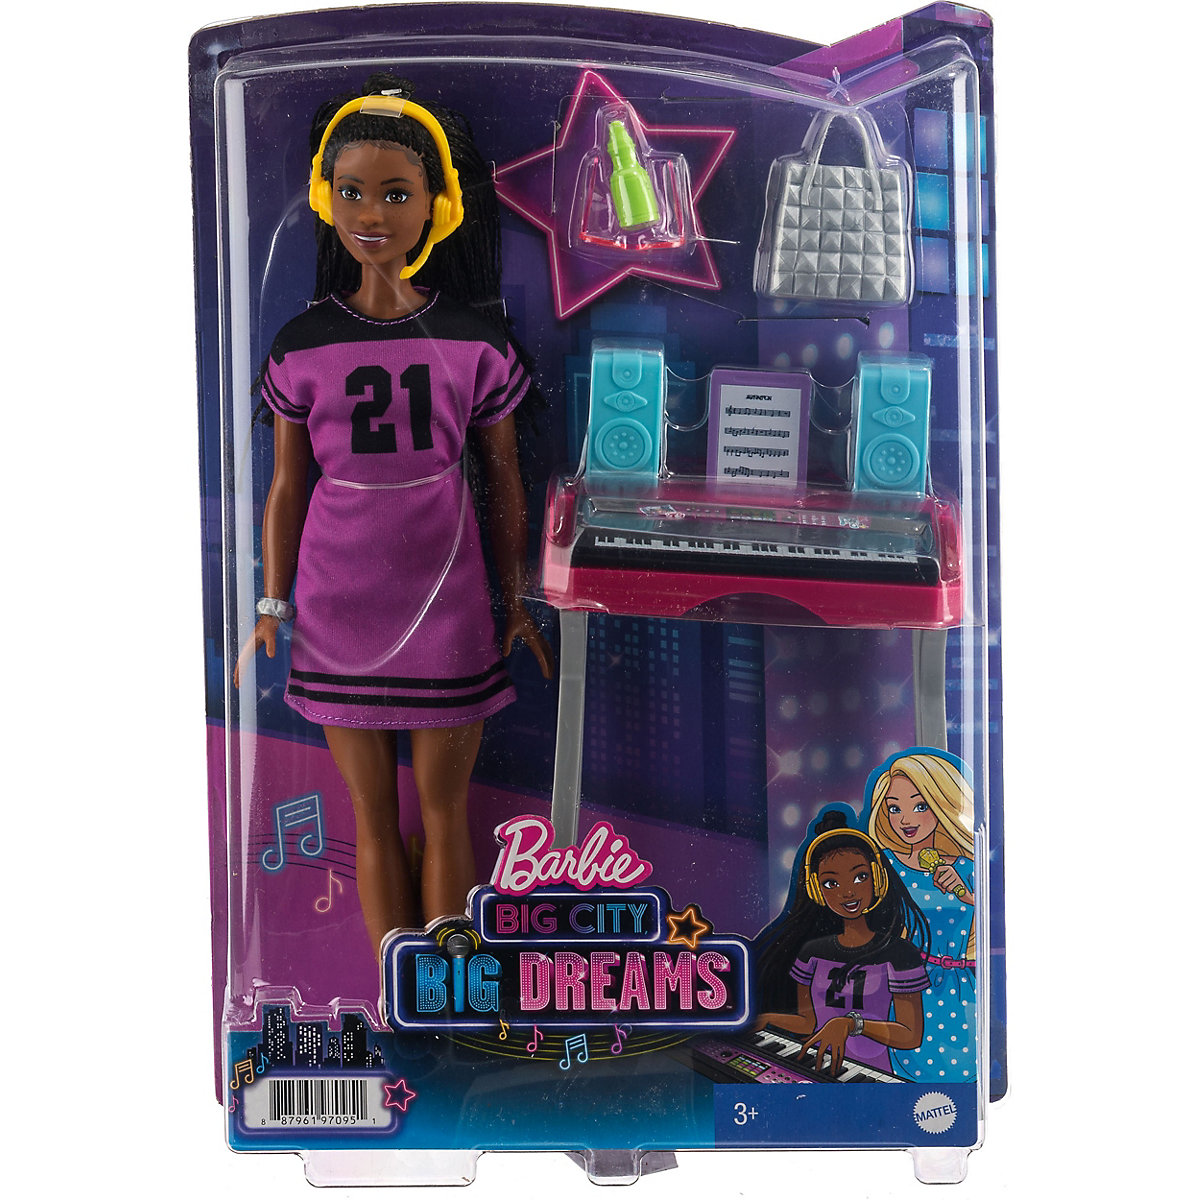 Barbie Big City Big Dreams Brooklyn Aufnahmestudio Spielset mit Puppe